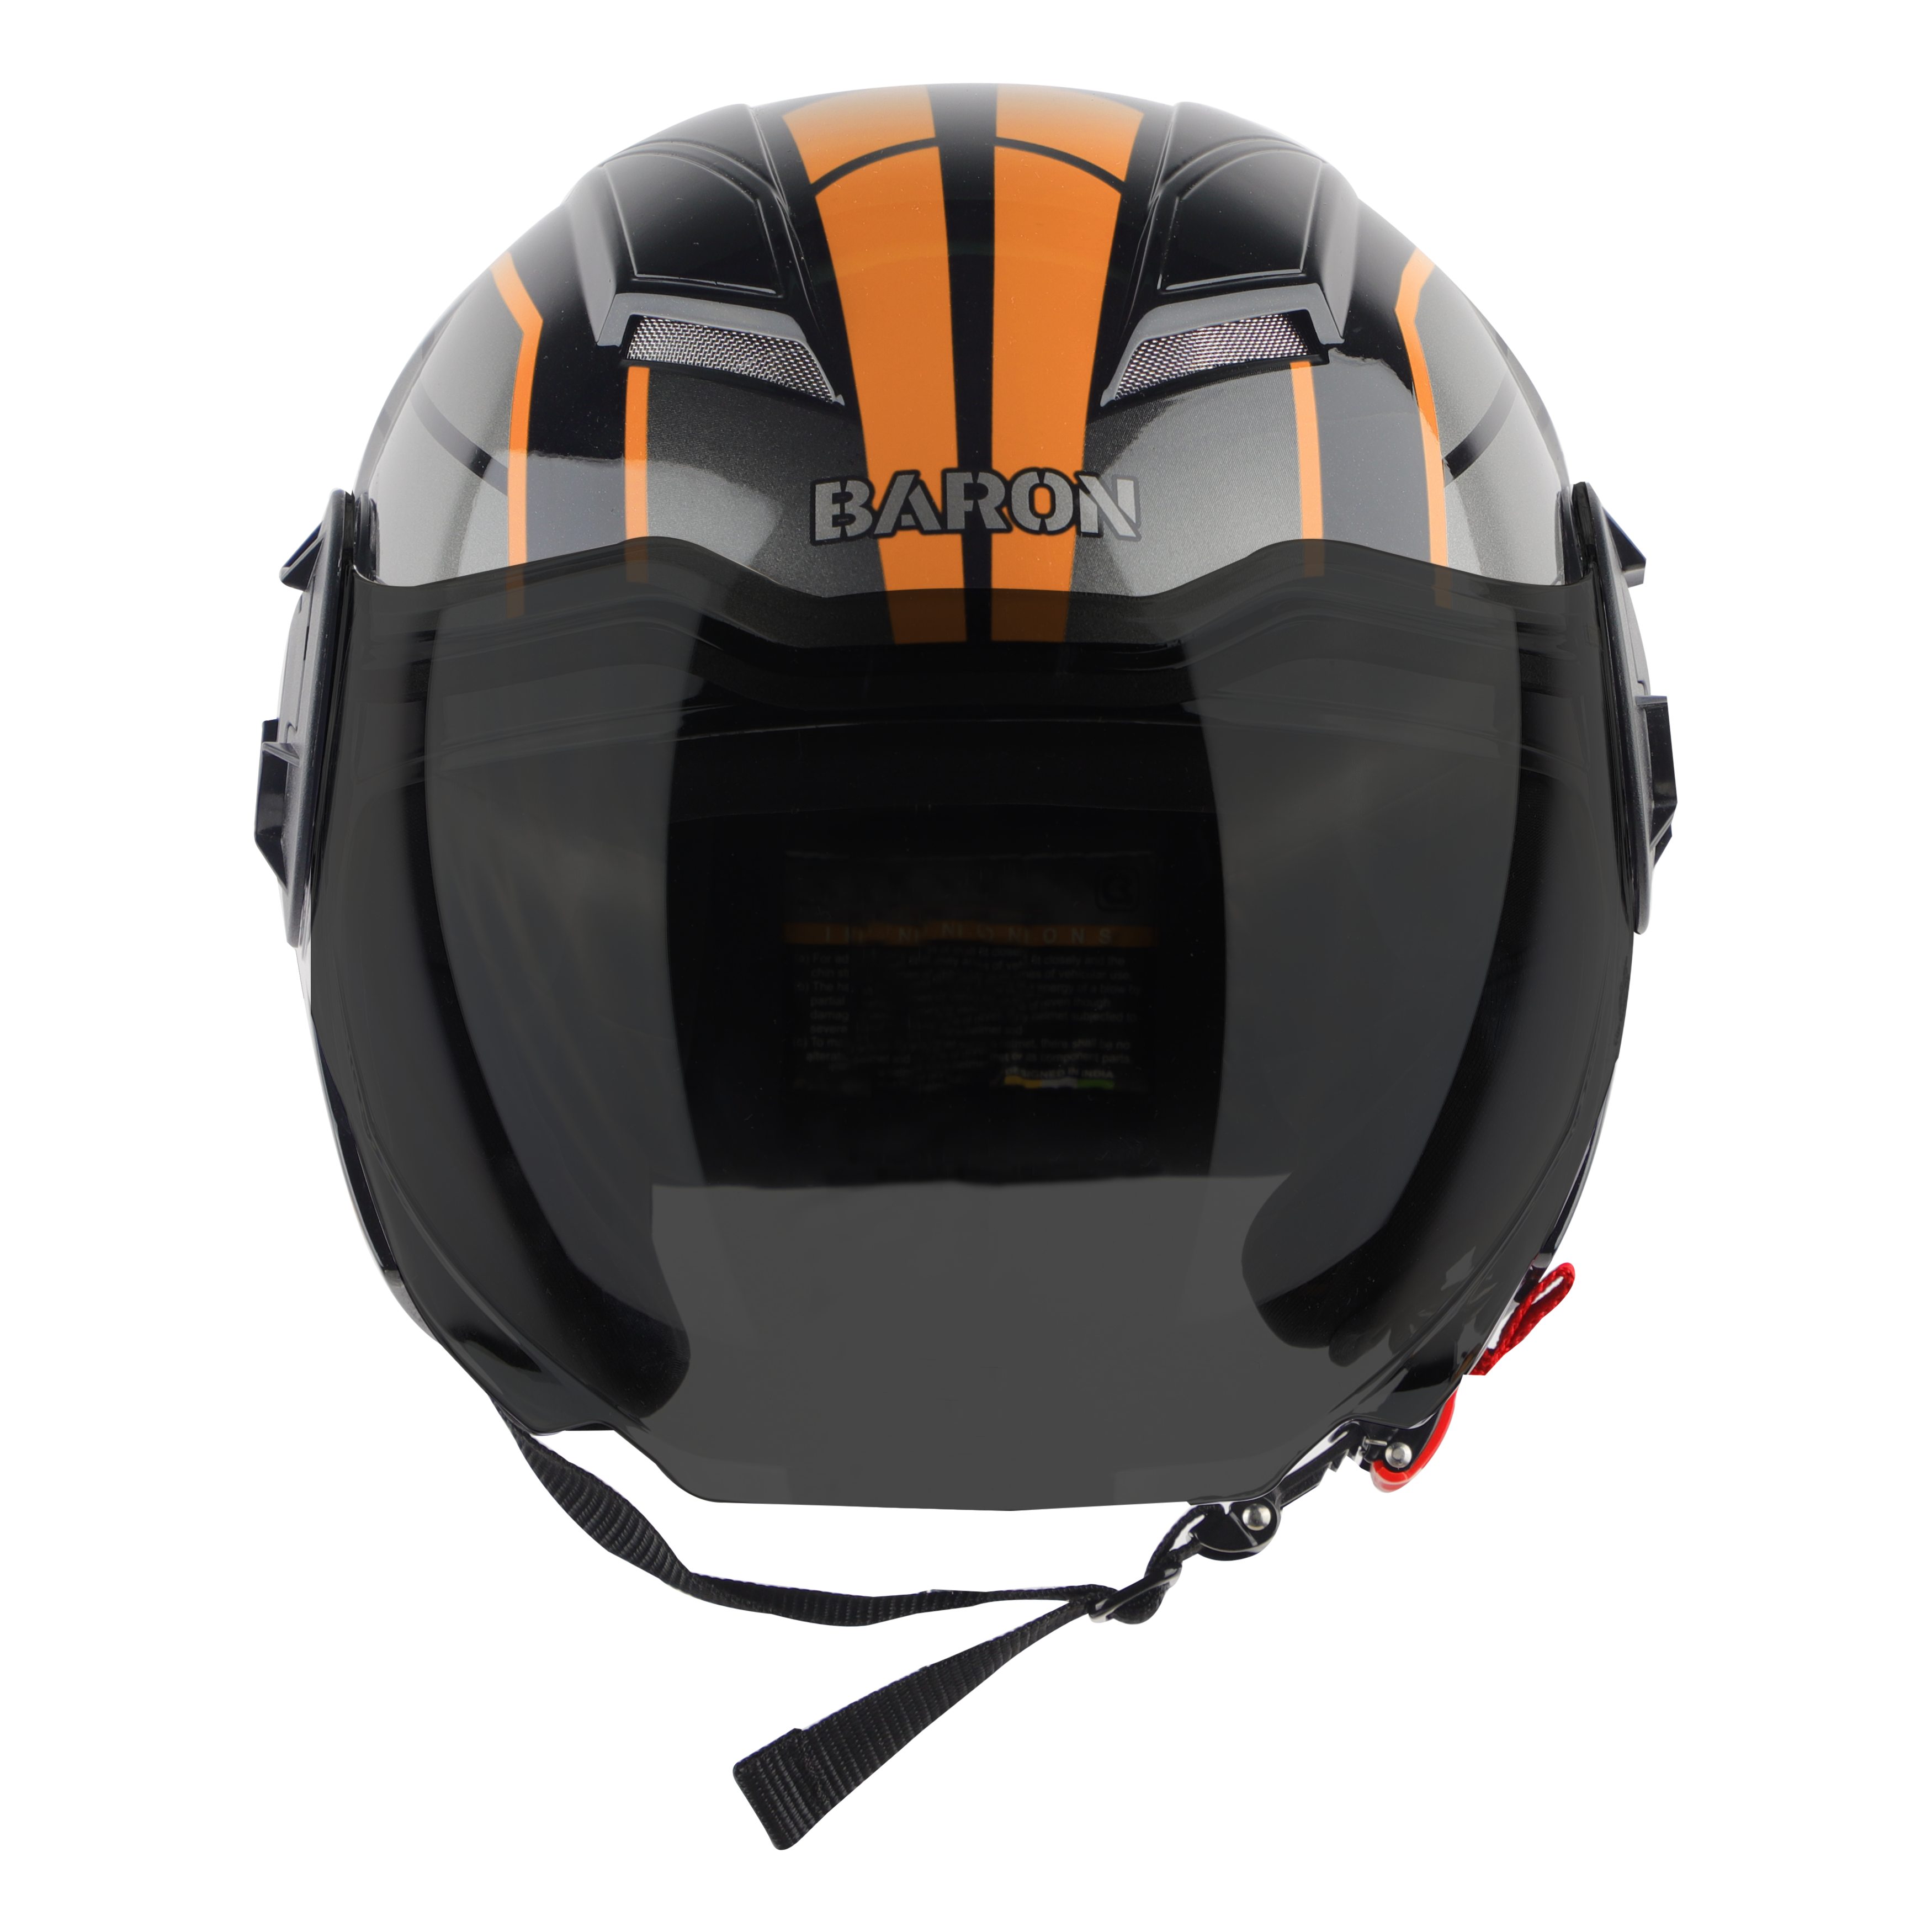 Steelbird SBH-31 Baron ISI Certified Open Face Helmet For Men And Women (Glossy Black Orange With Smoke Visor)